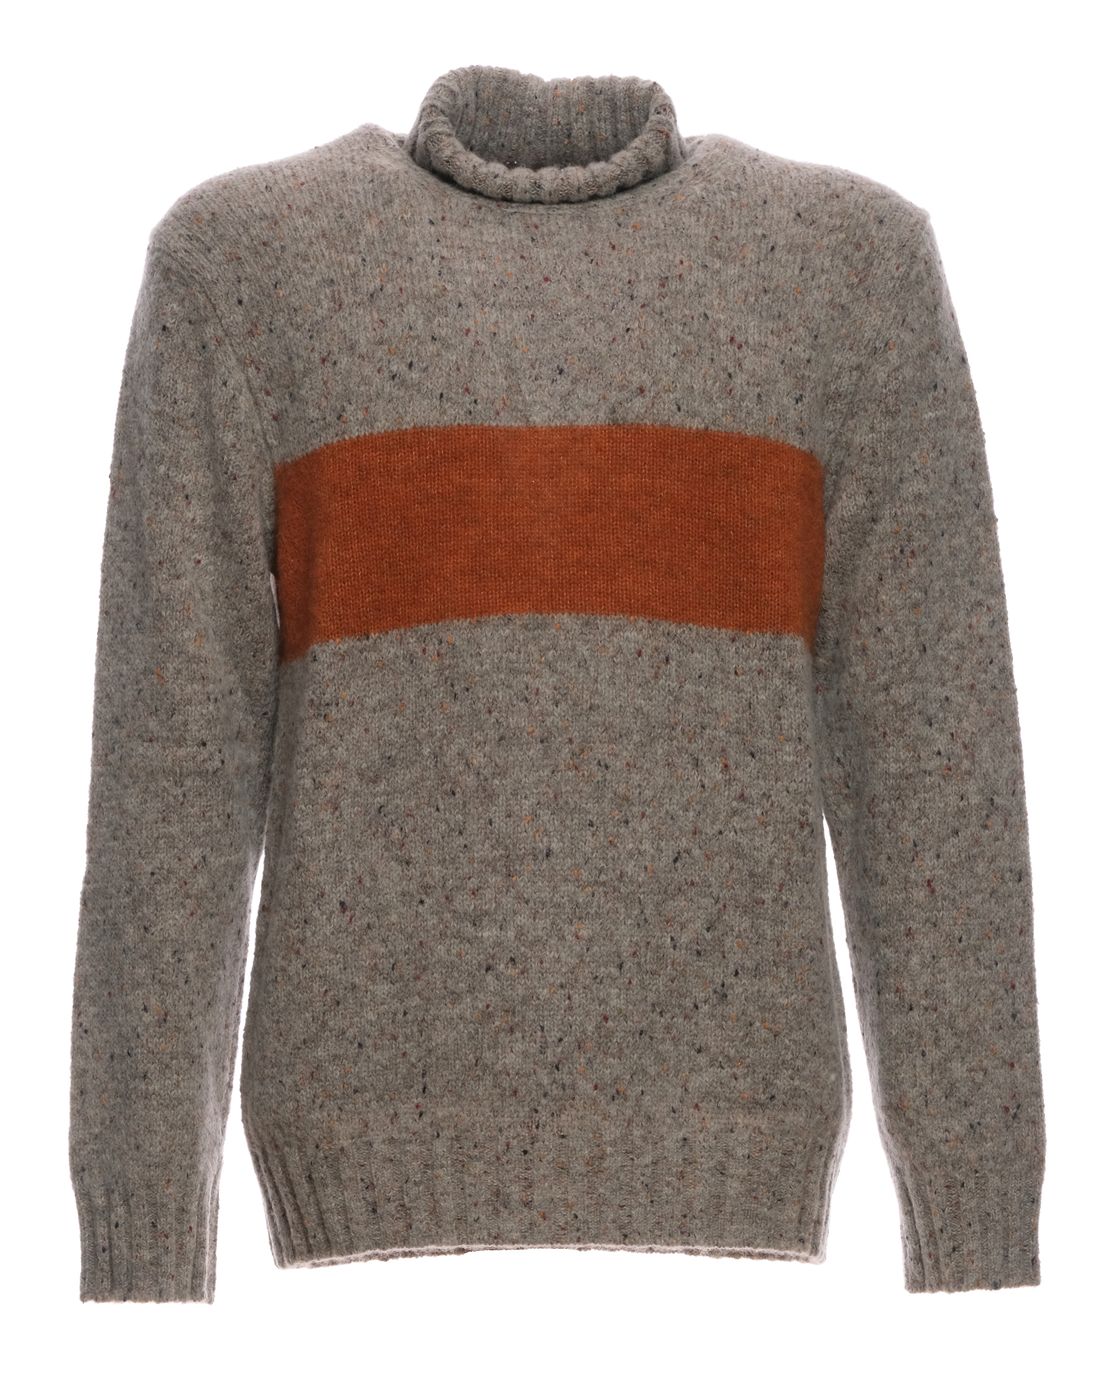 Sweater for man LM U7502 081 CONLEY GALLIA